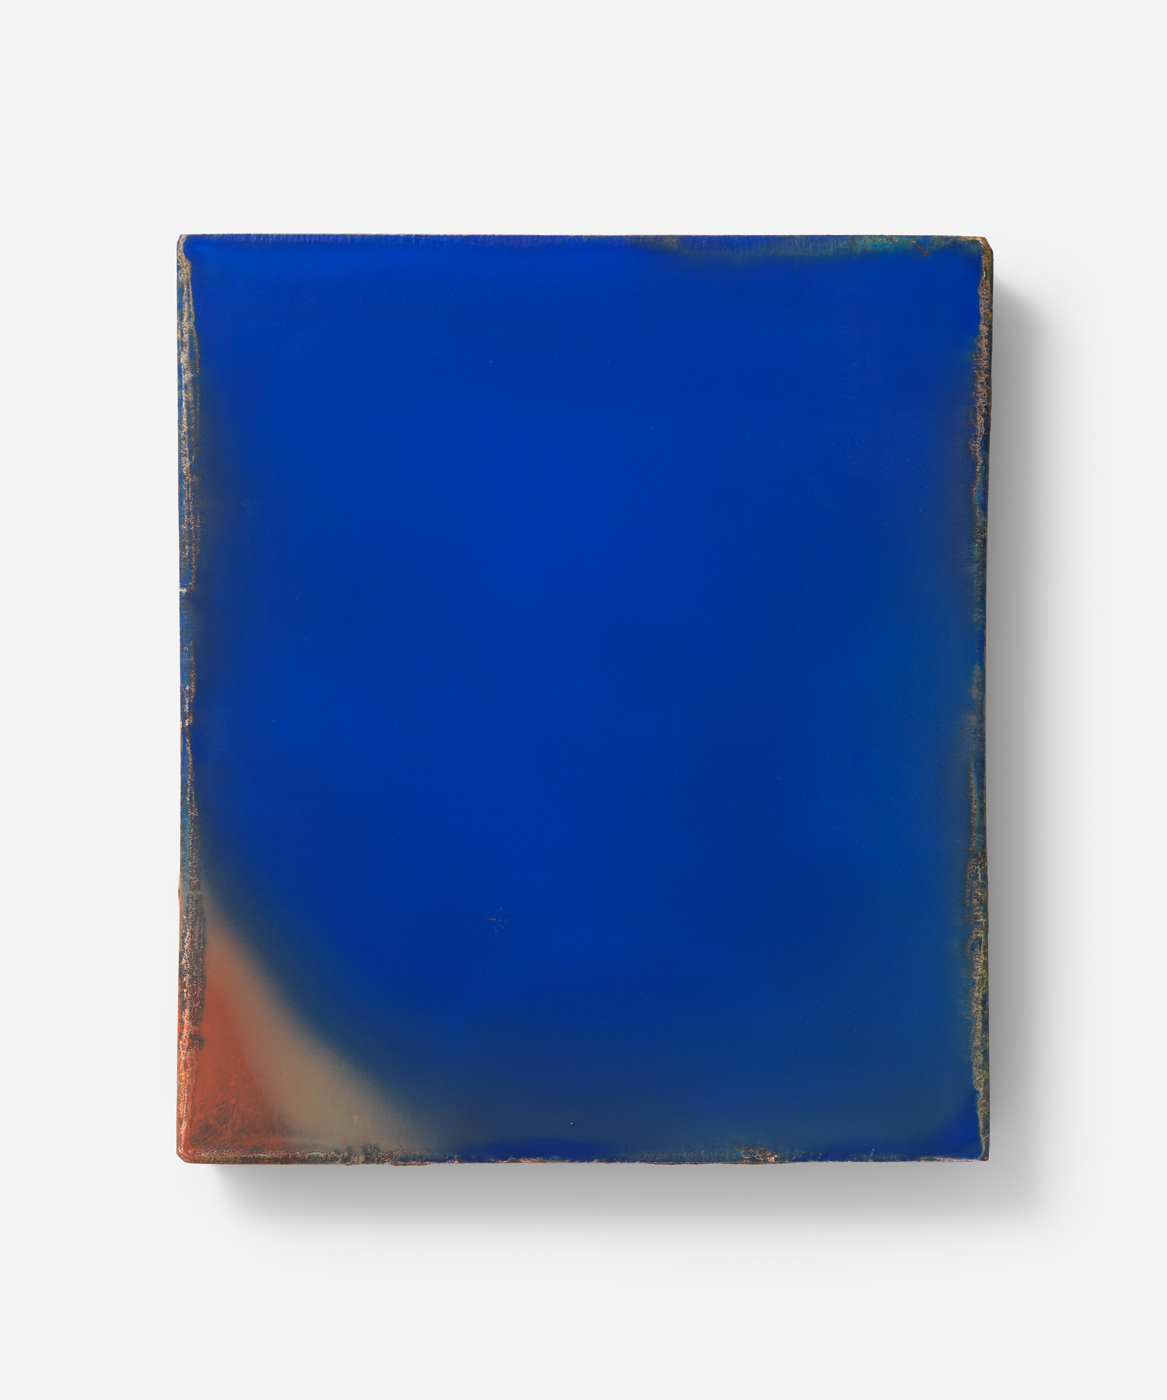     Untitled 2014 Oil on gesso board 35 x 30 cm / 13.7 x 11.8 in 